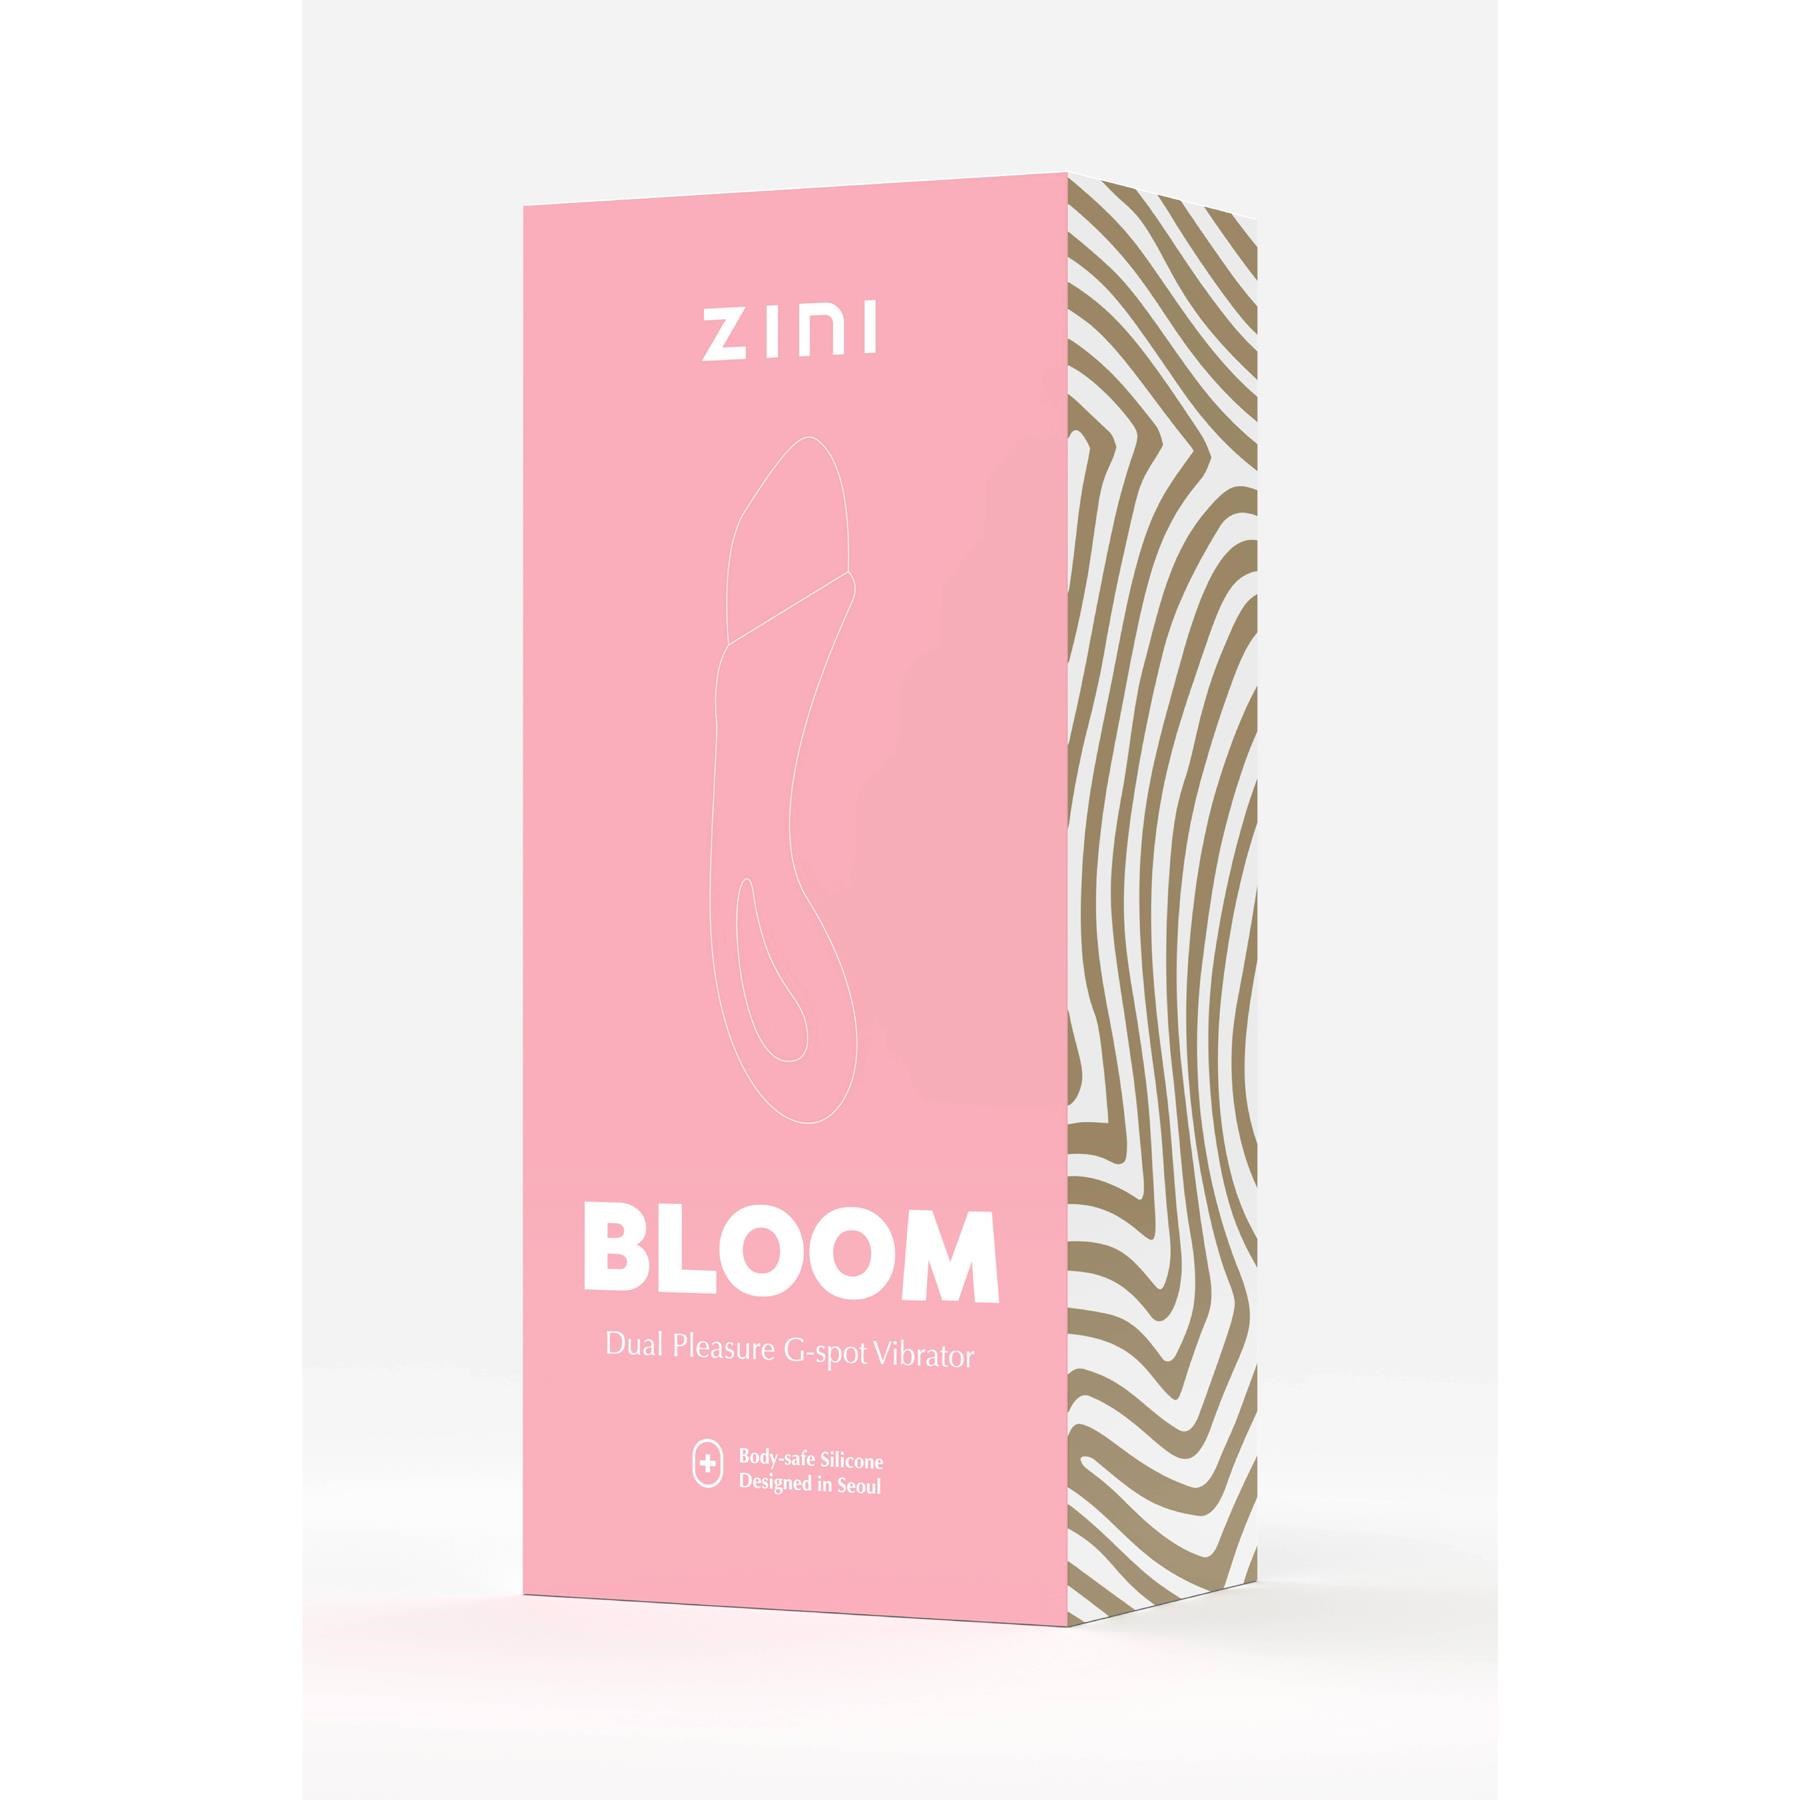 Zini Bloom G-Spot Massager - Packaging - Front